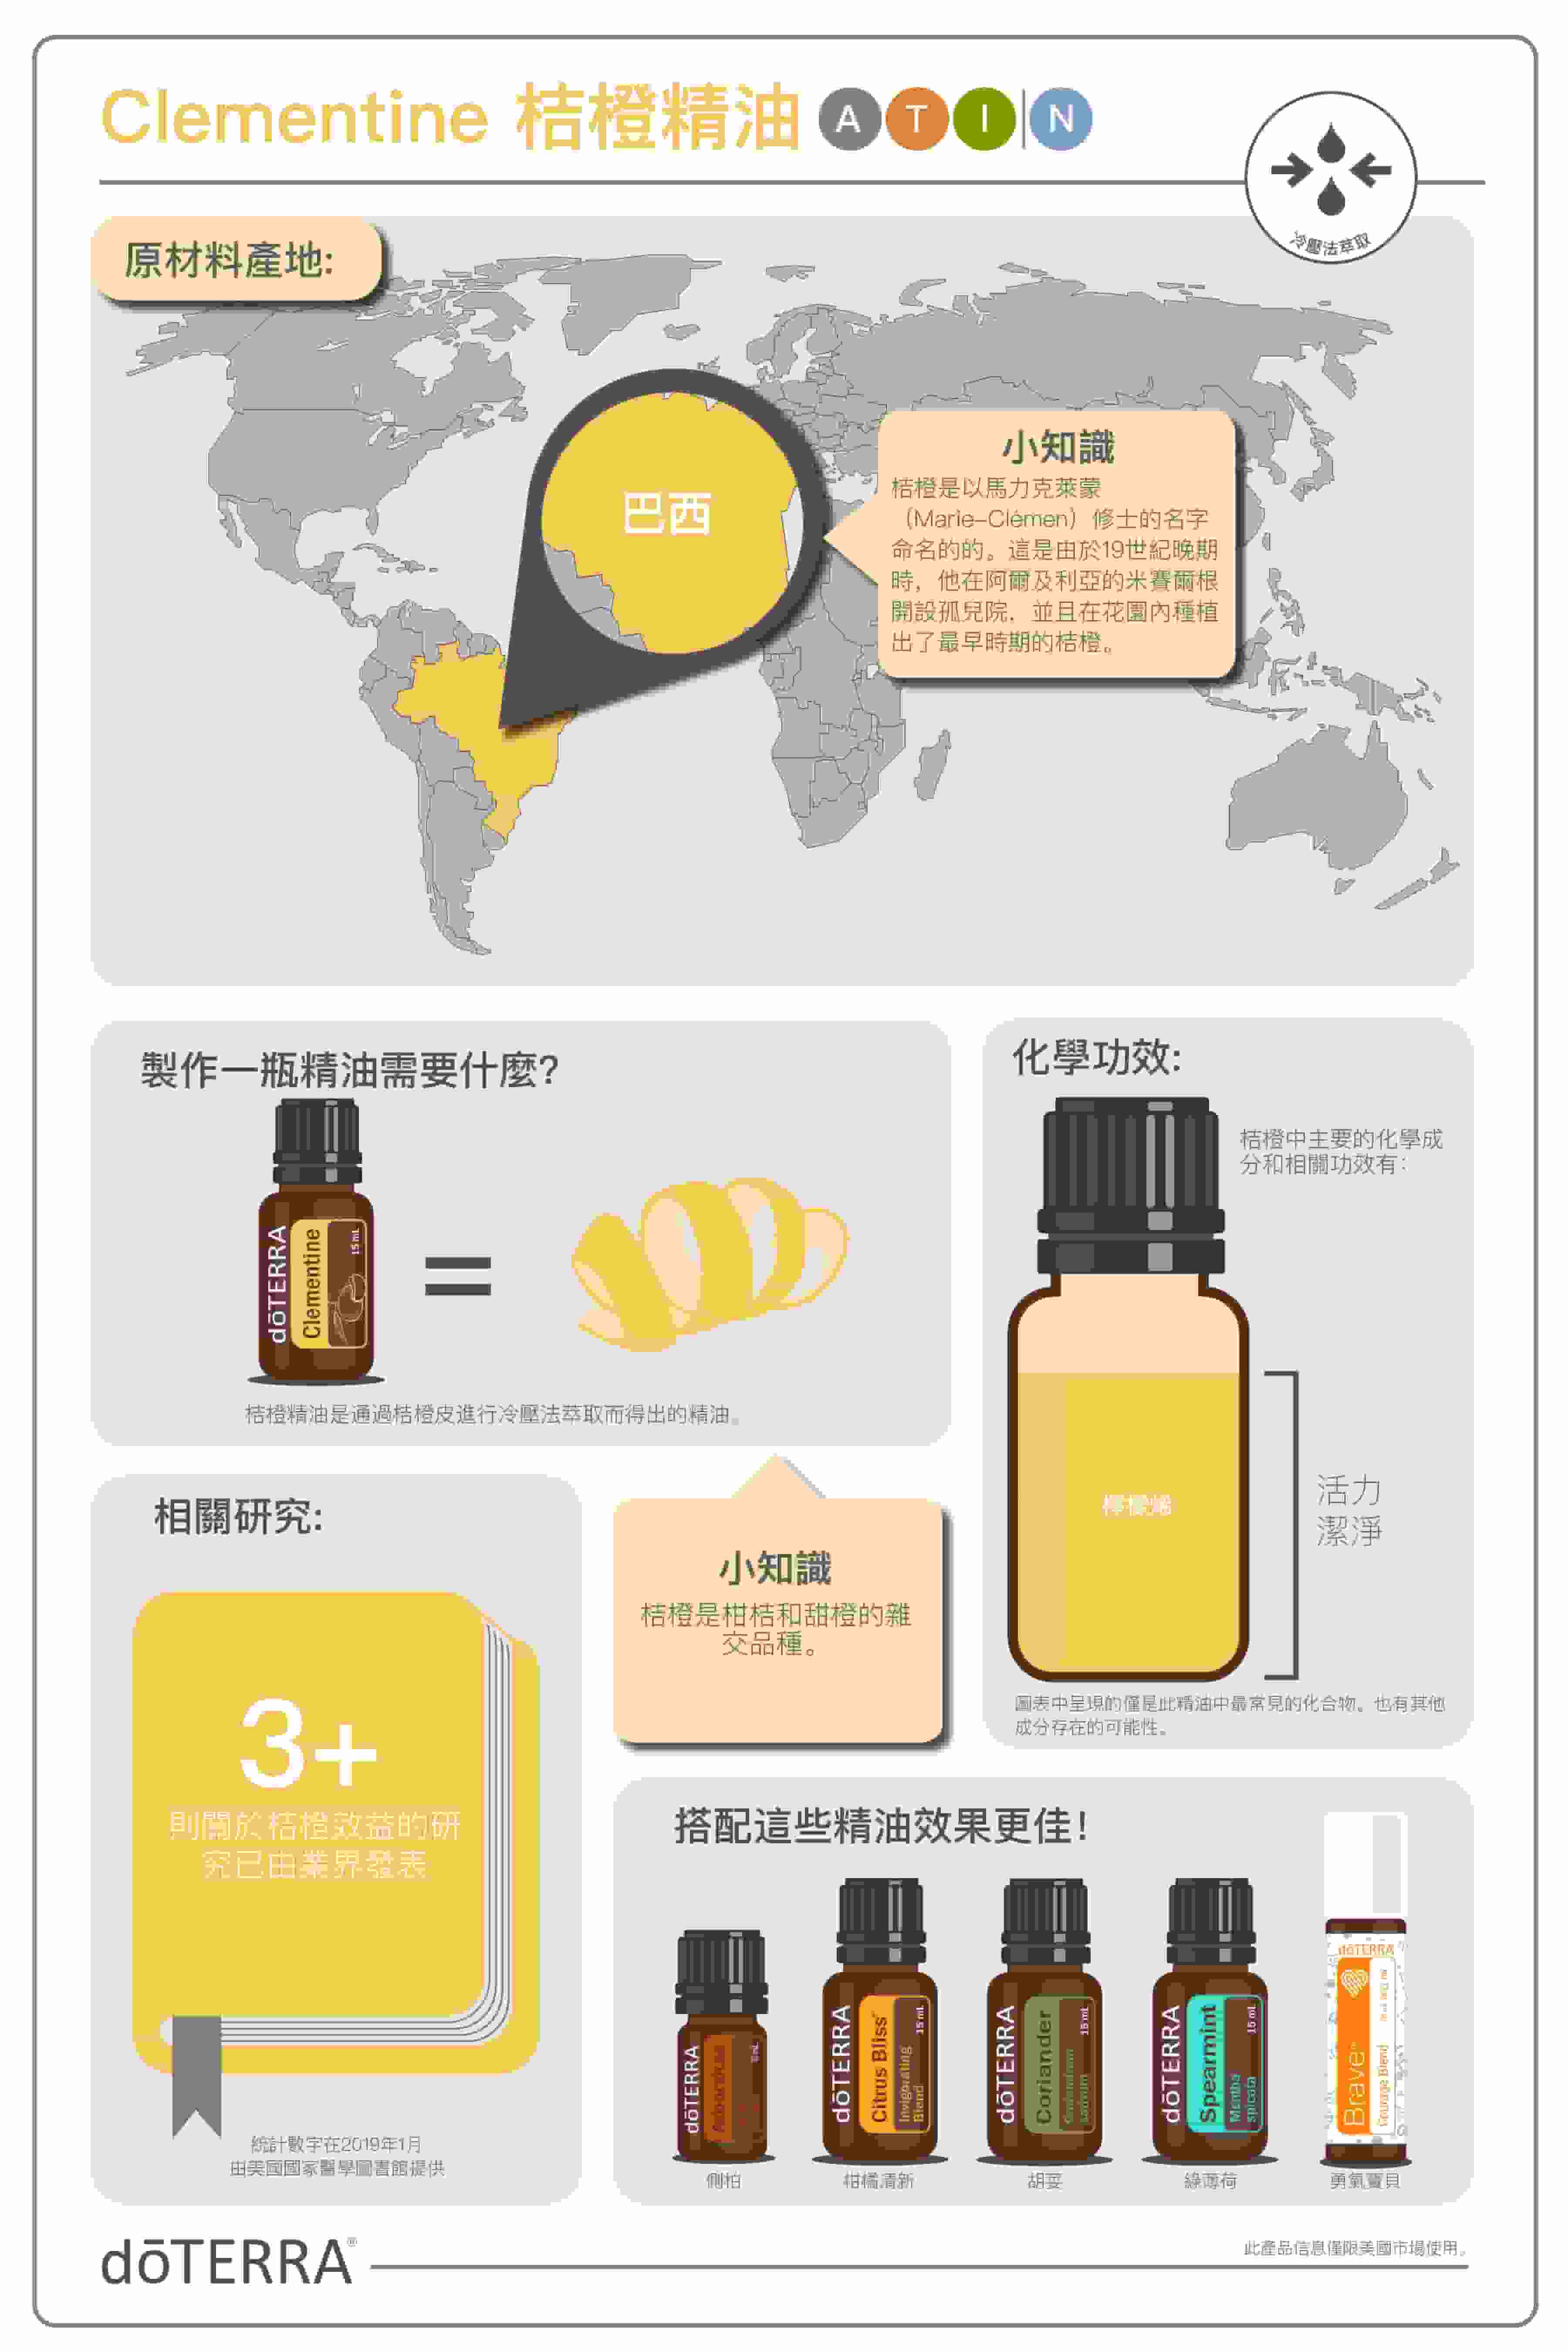 clementine-Infographic-us-cn-桔橙信息圖.jpg